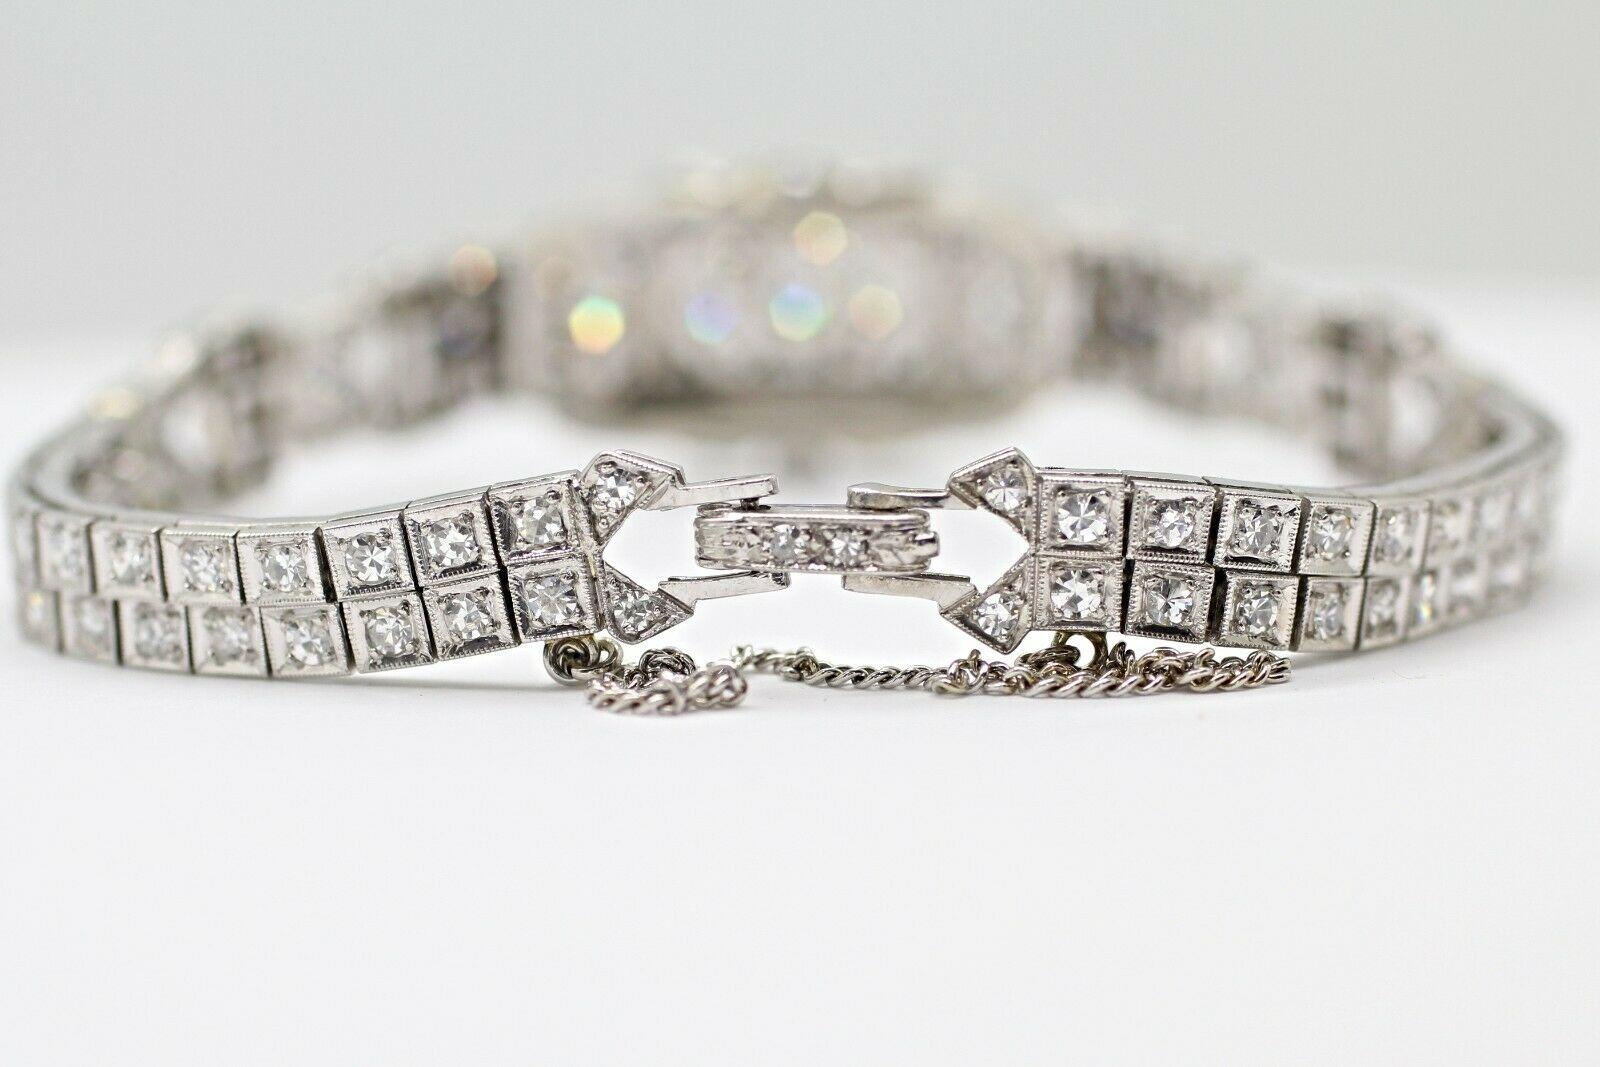 Women's or Men's Art Deco Diamond Bracelet Was a Watch Converted to a Bracelet